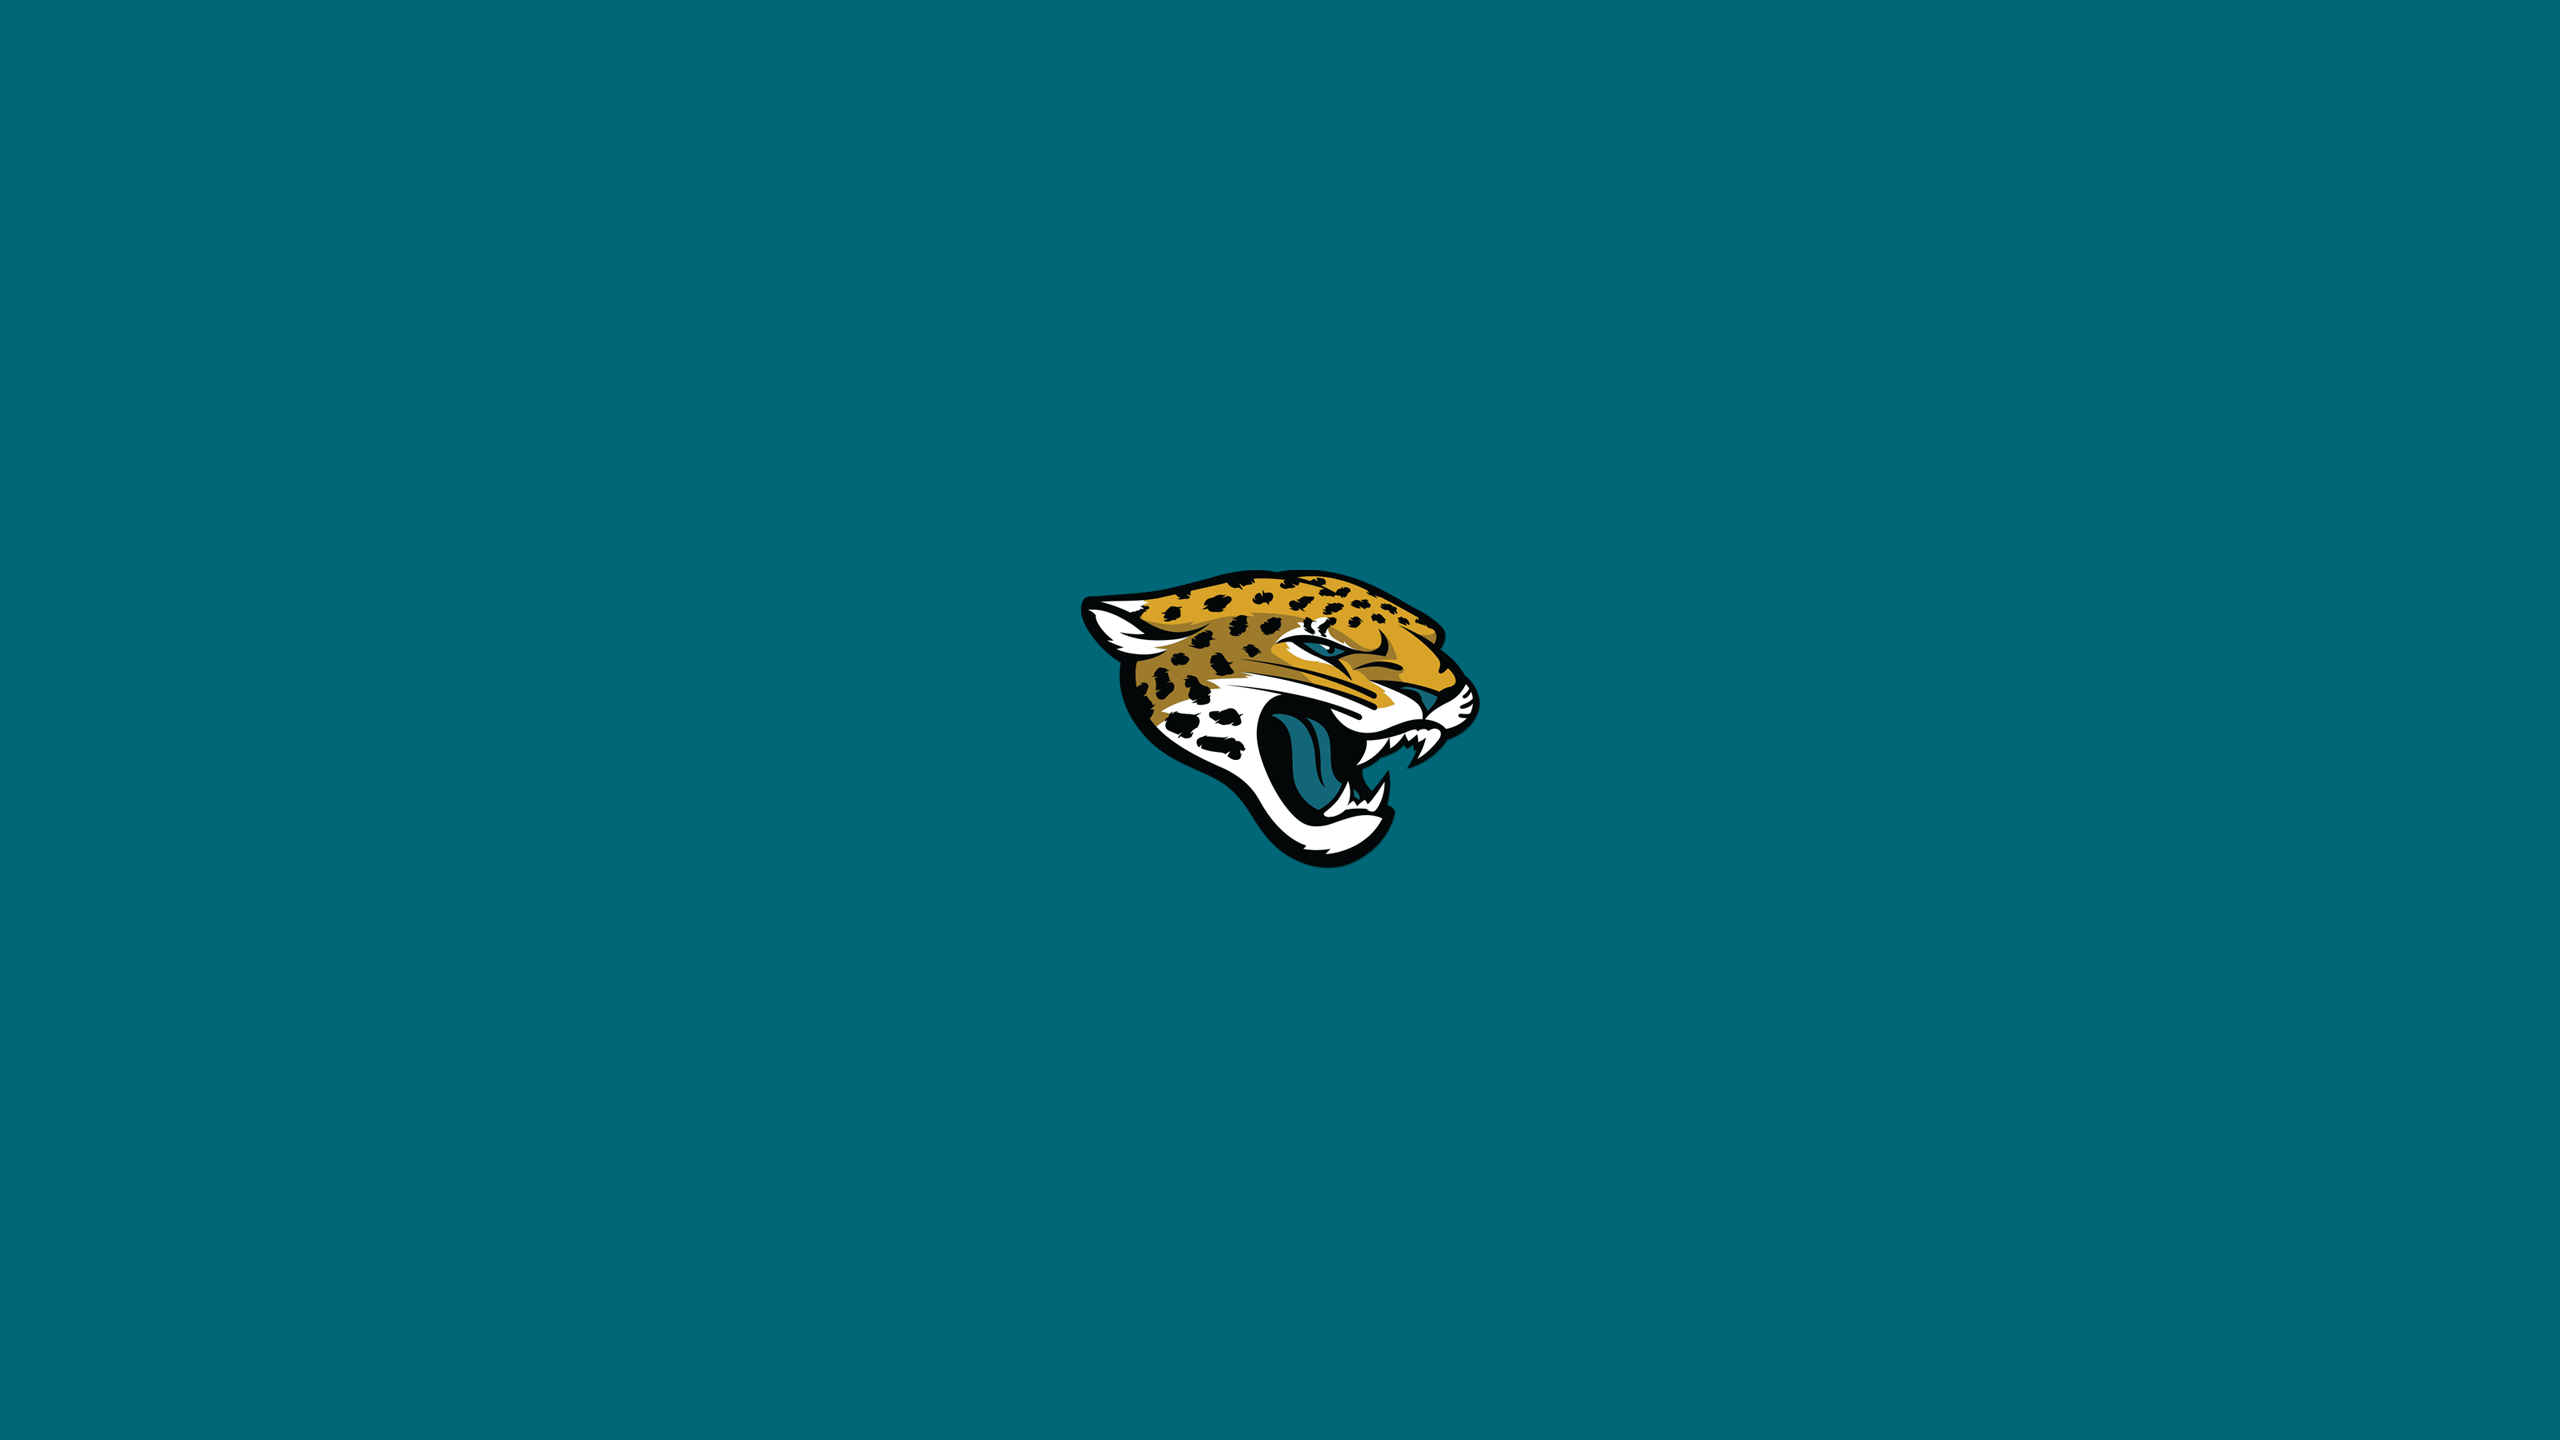 Jacksonville Jaguars - NFL - Square Bettor